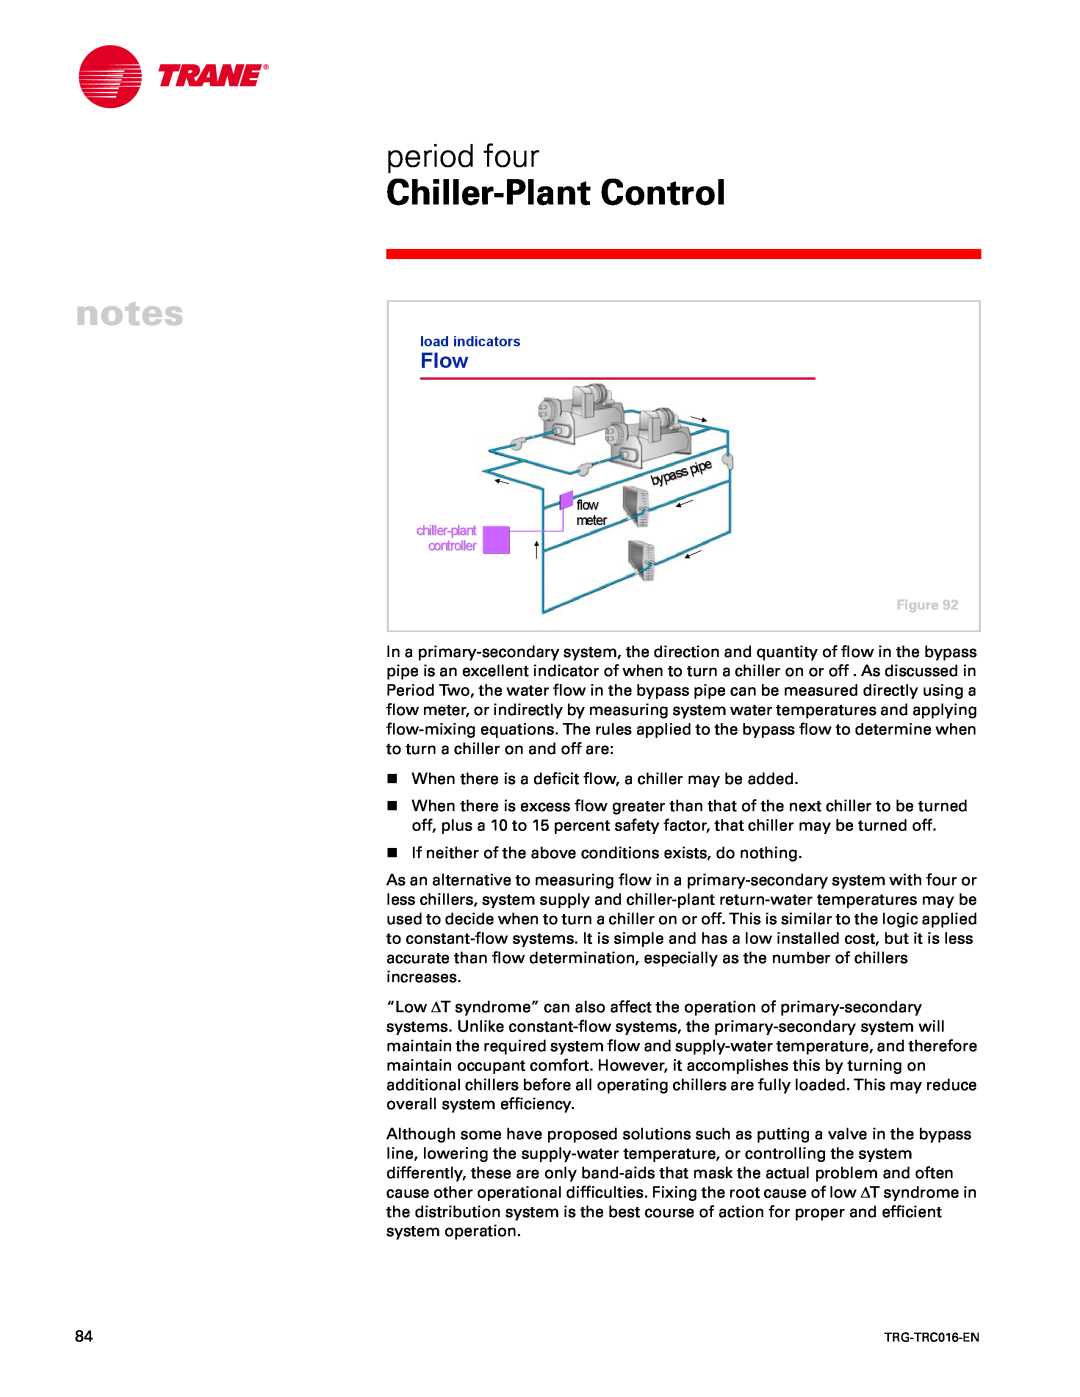 Trane TRG-TRC016-EN manual Flow, notes, Chiller-PlantControl, period four, flow meter 